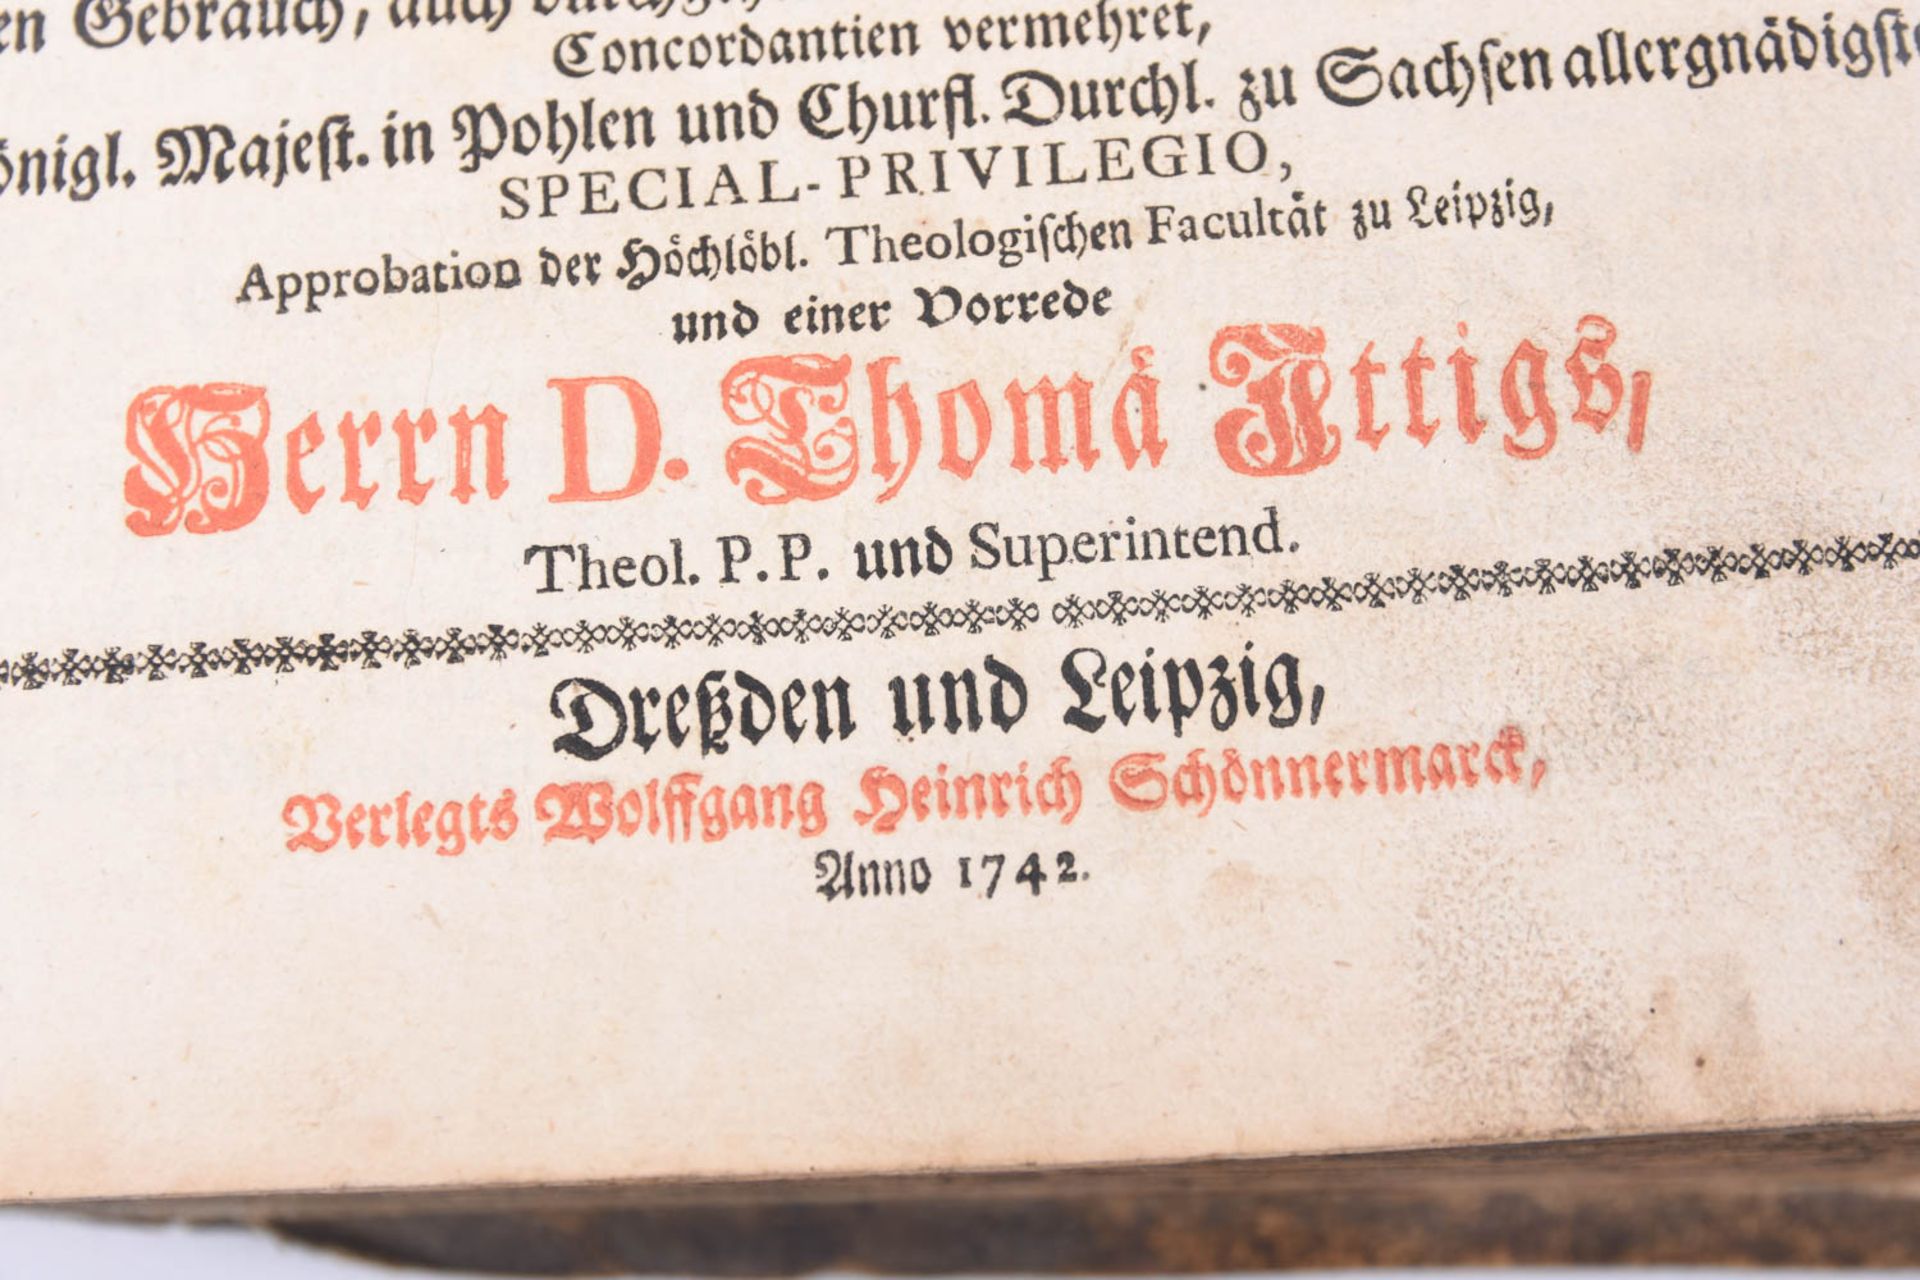 Luther Bibel, 1742 - Image 15 of 18